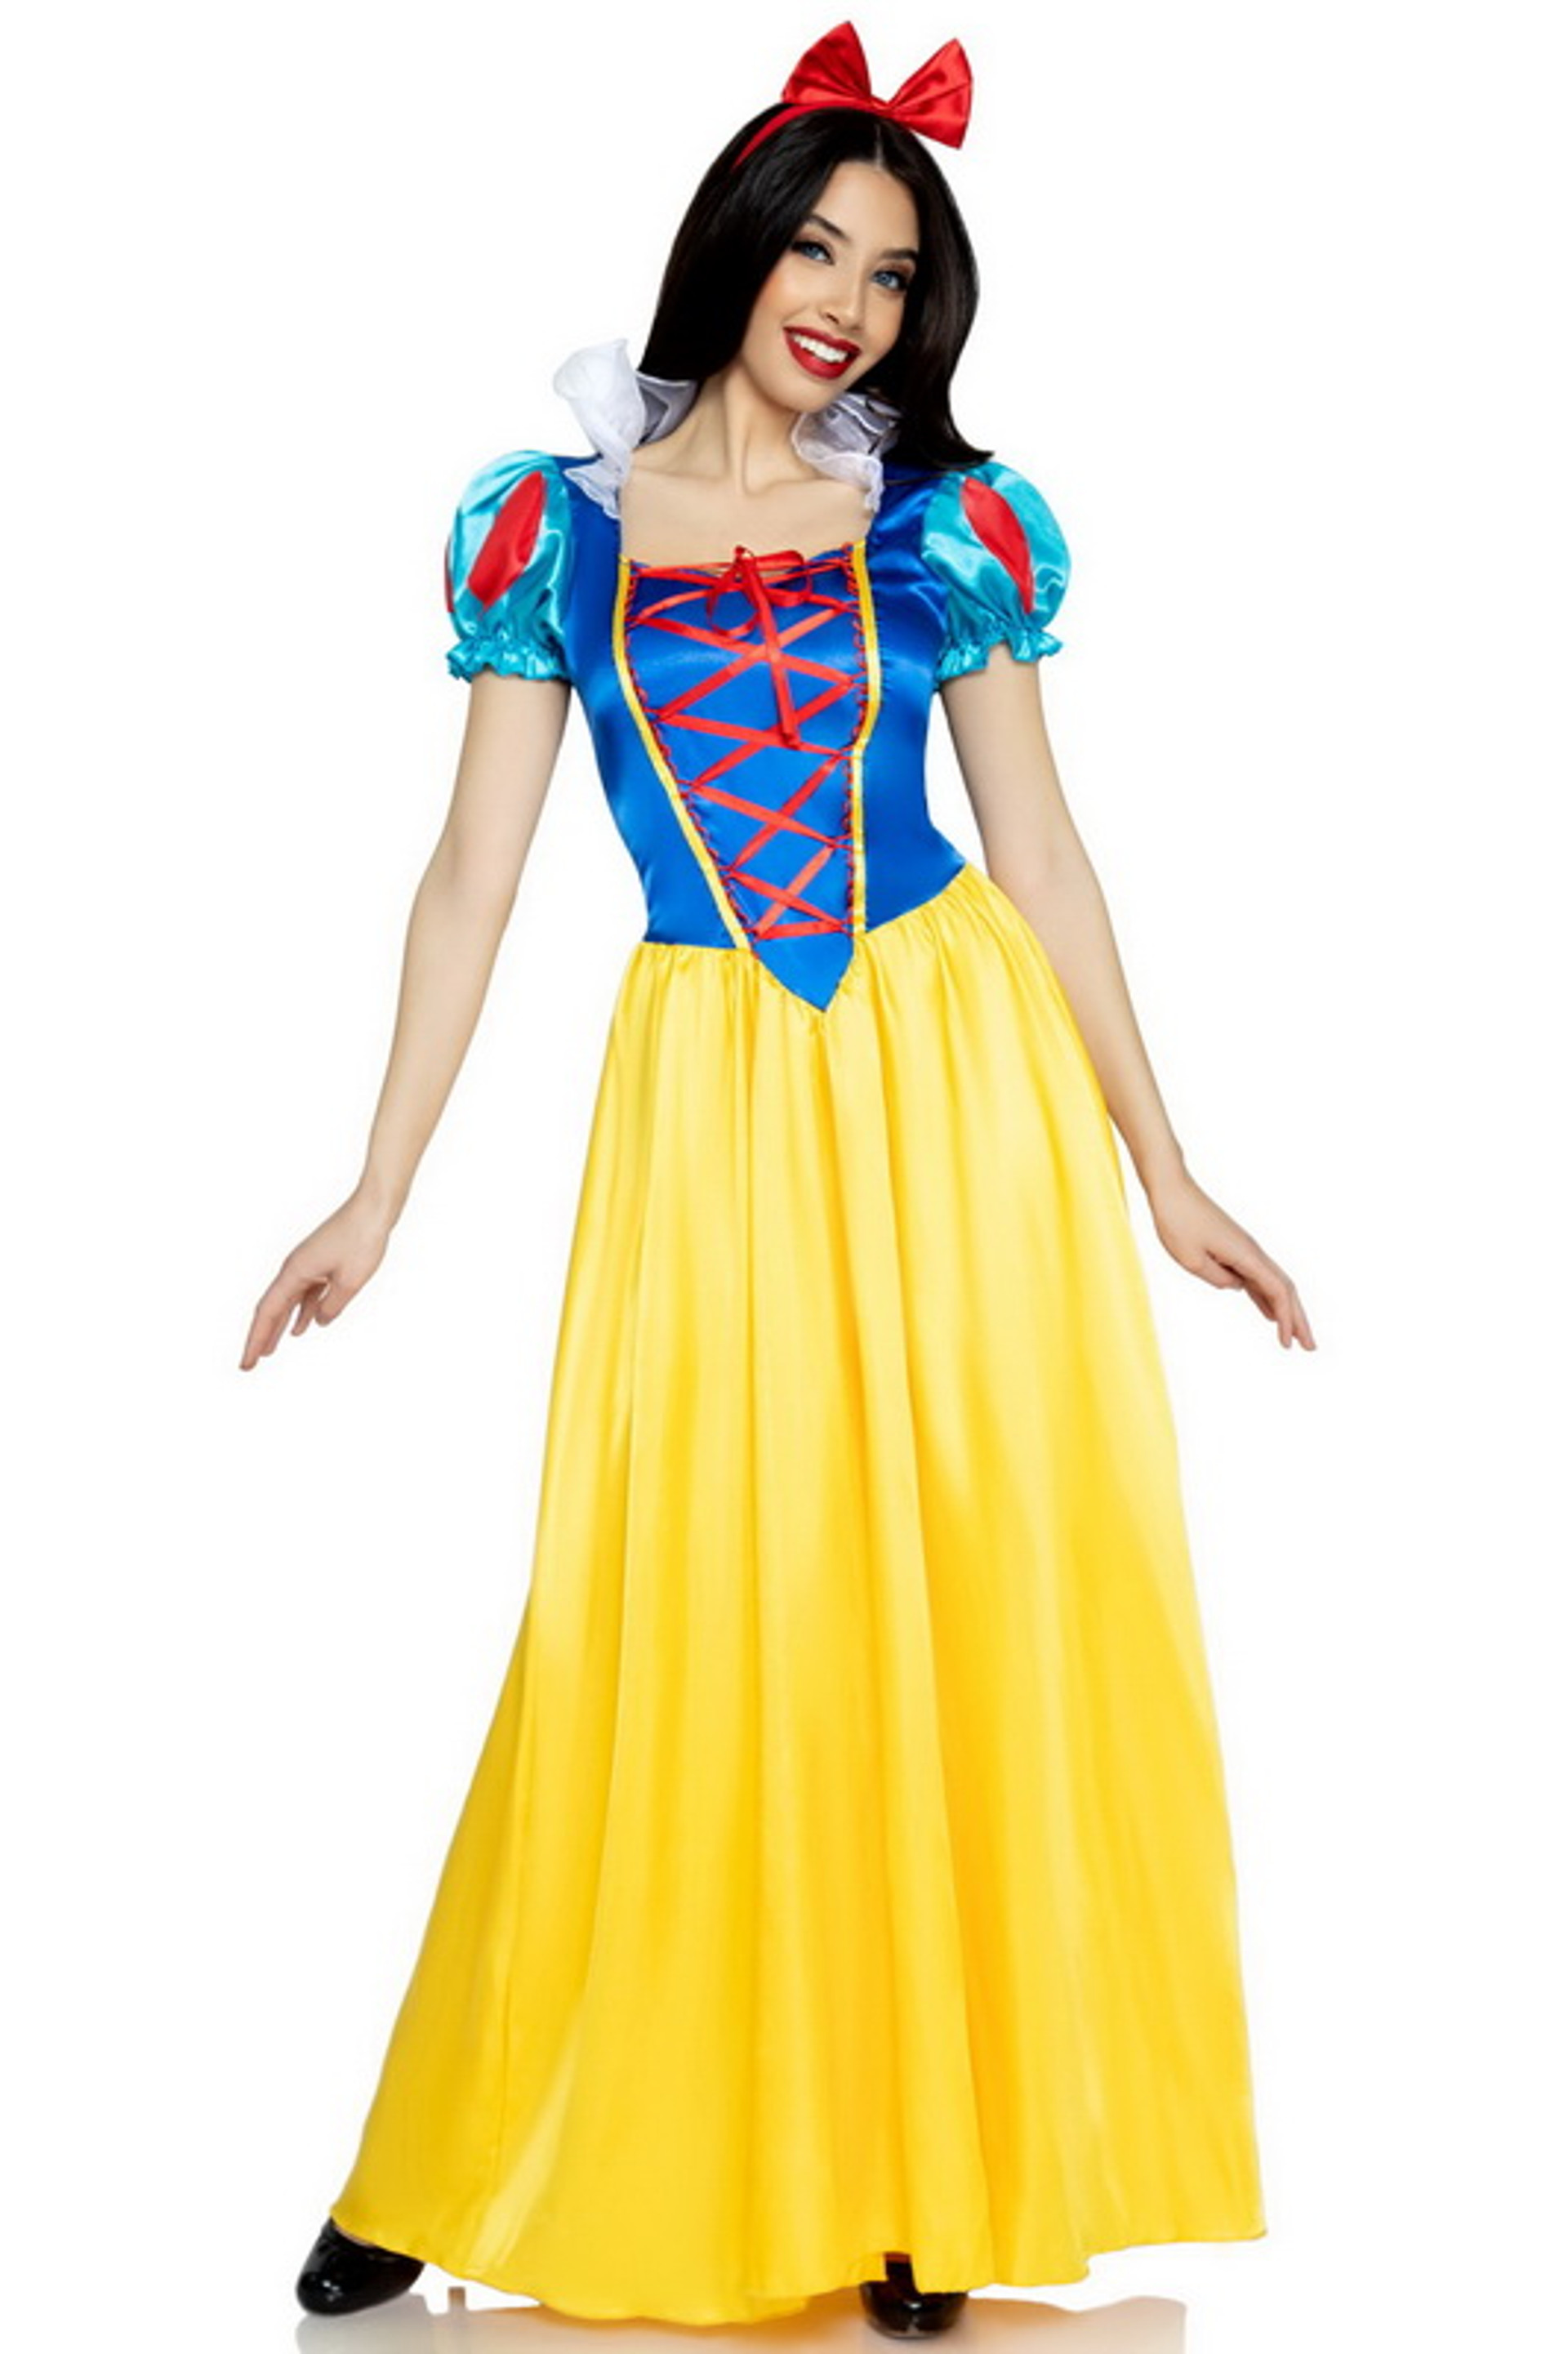 Bad Apple Snow White Halloween Costume- Spicy Lingerie